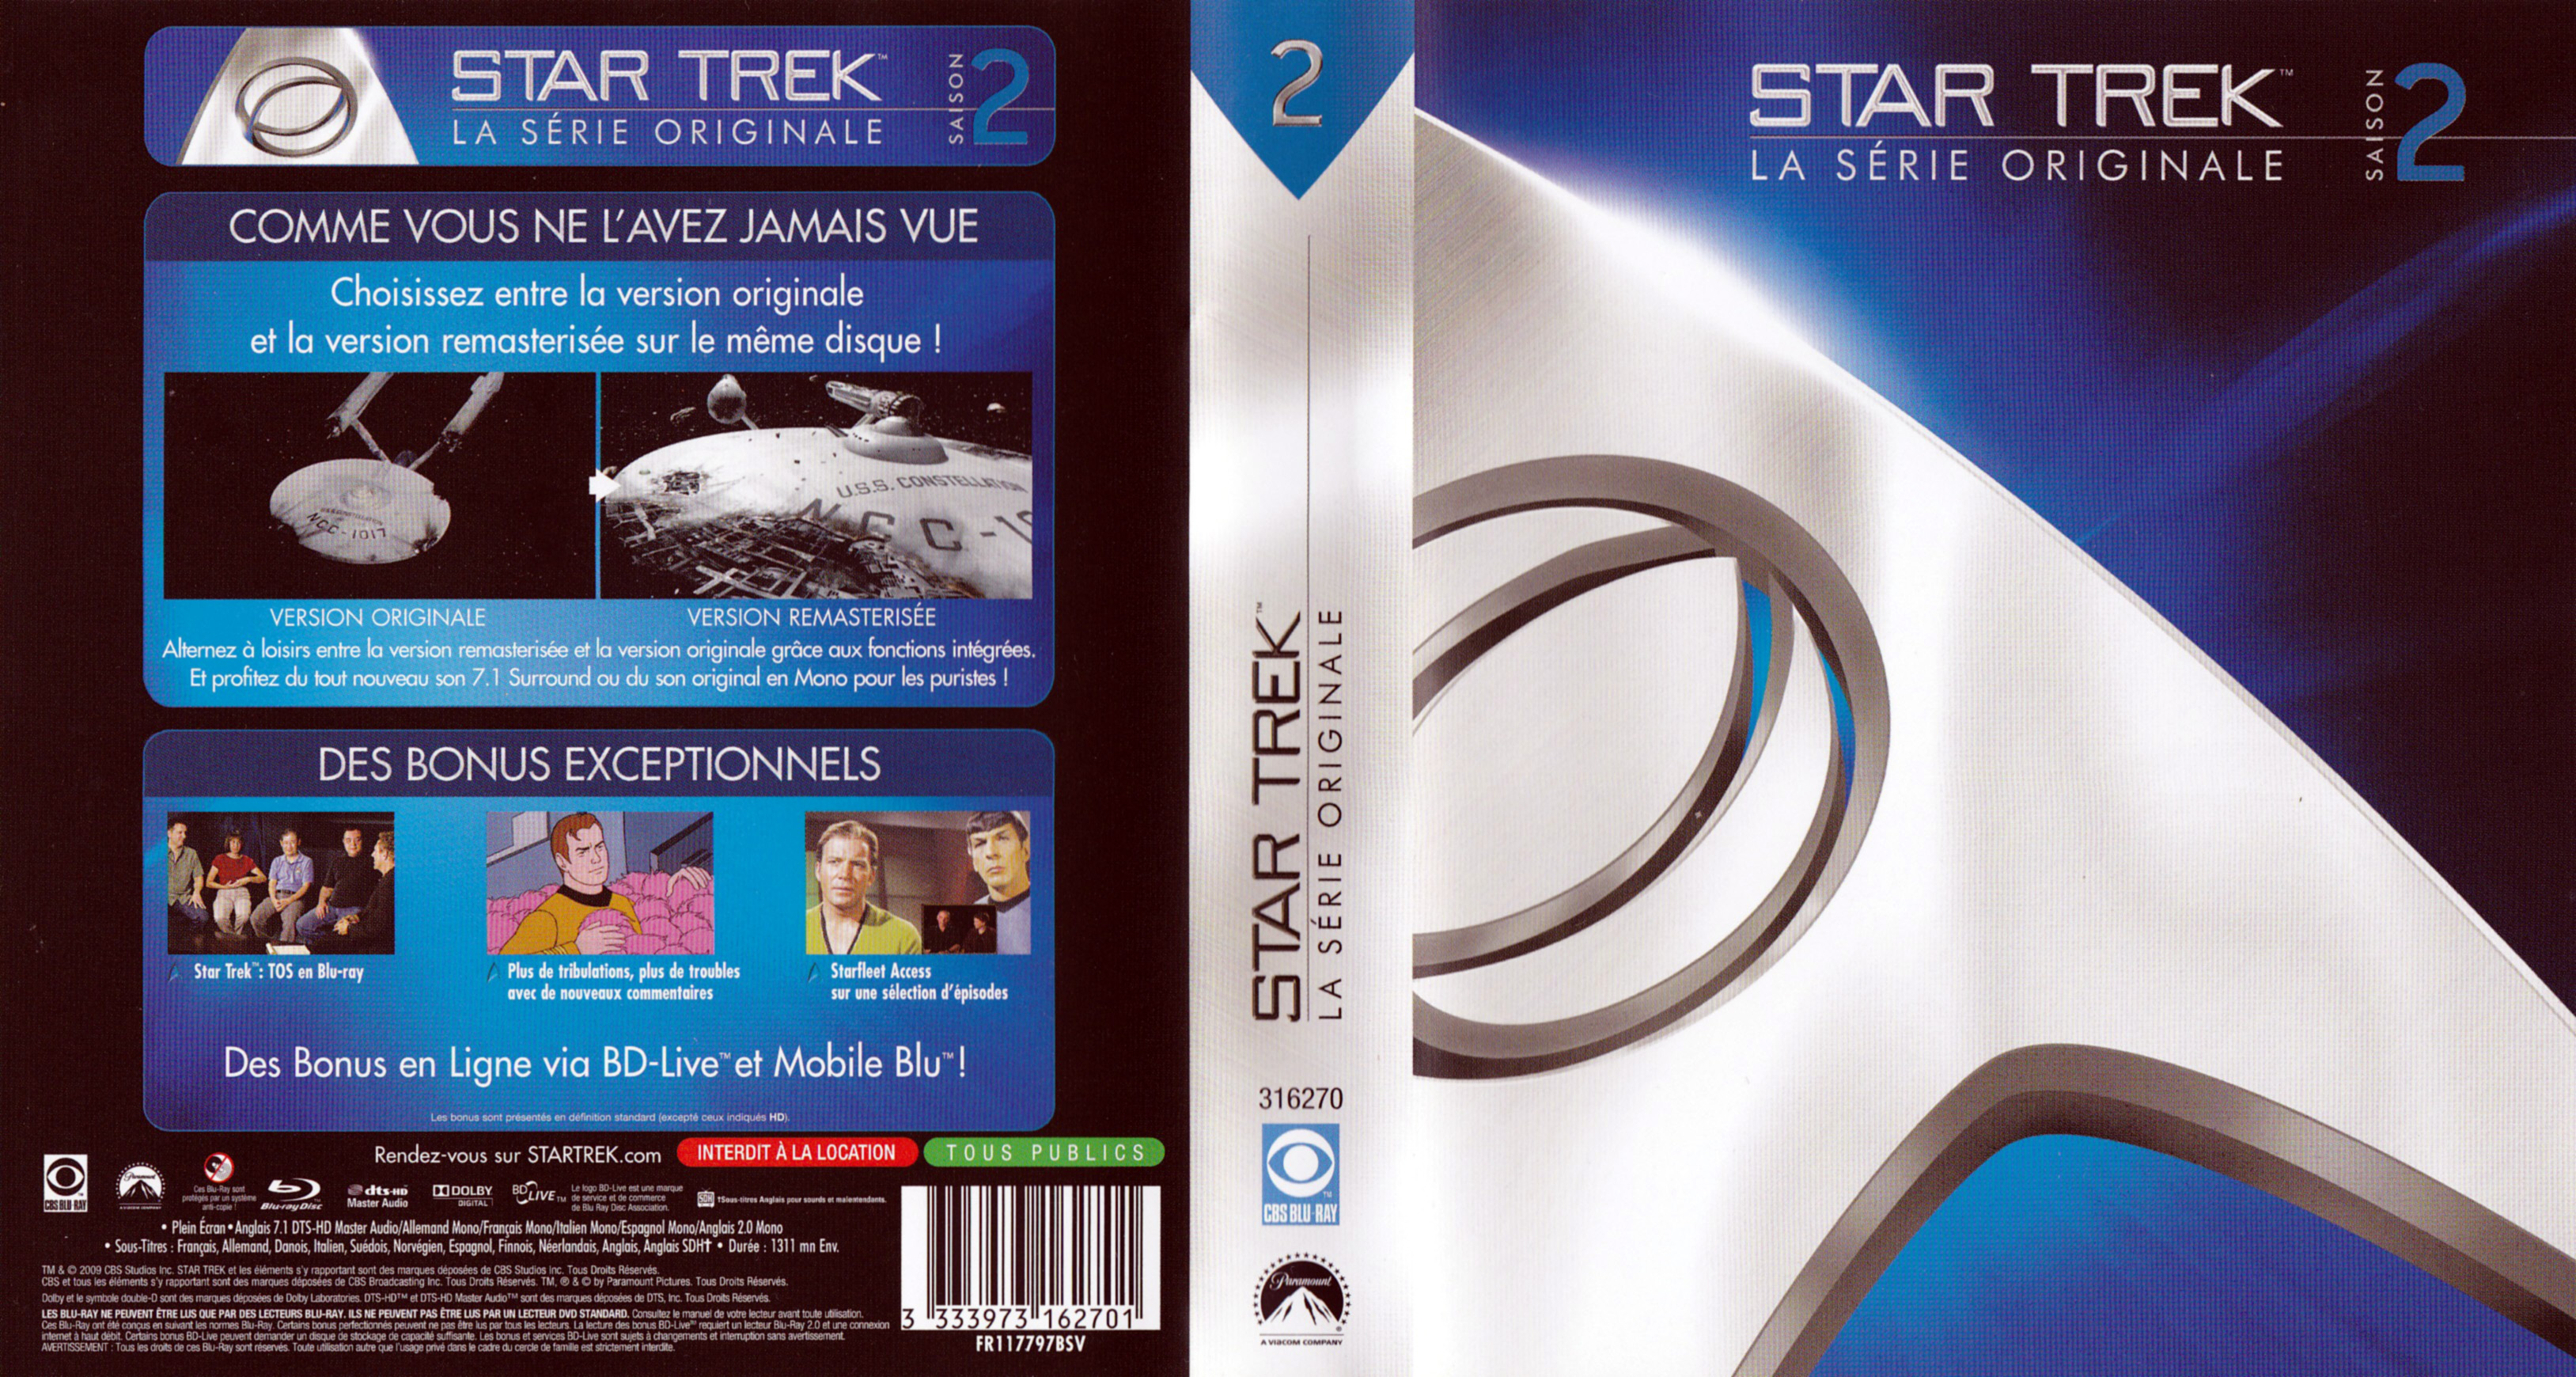 Jaquette DVD Star trek Saison 2 (BLU-RAY)